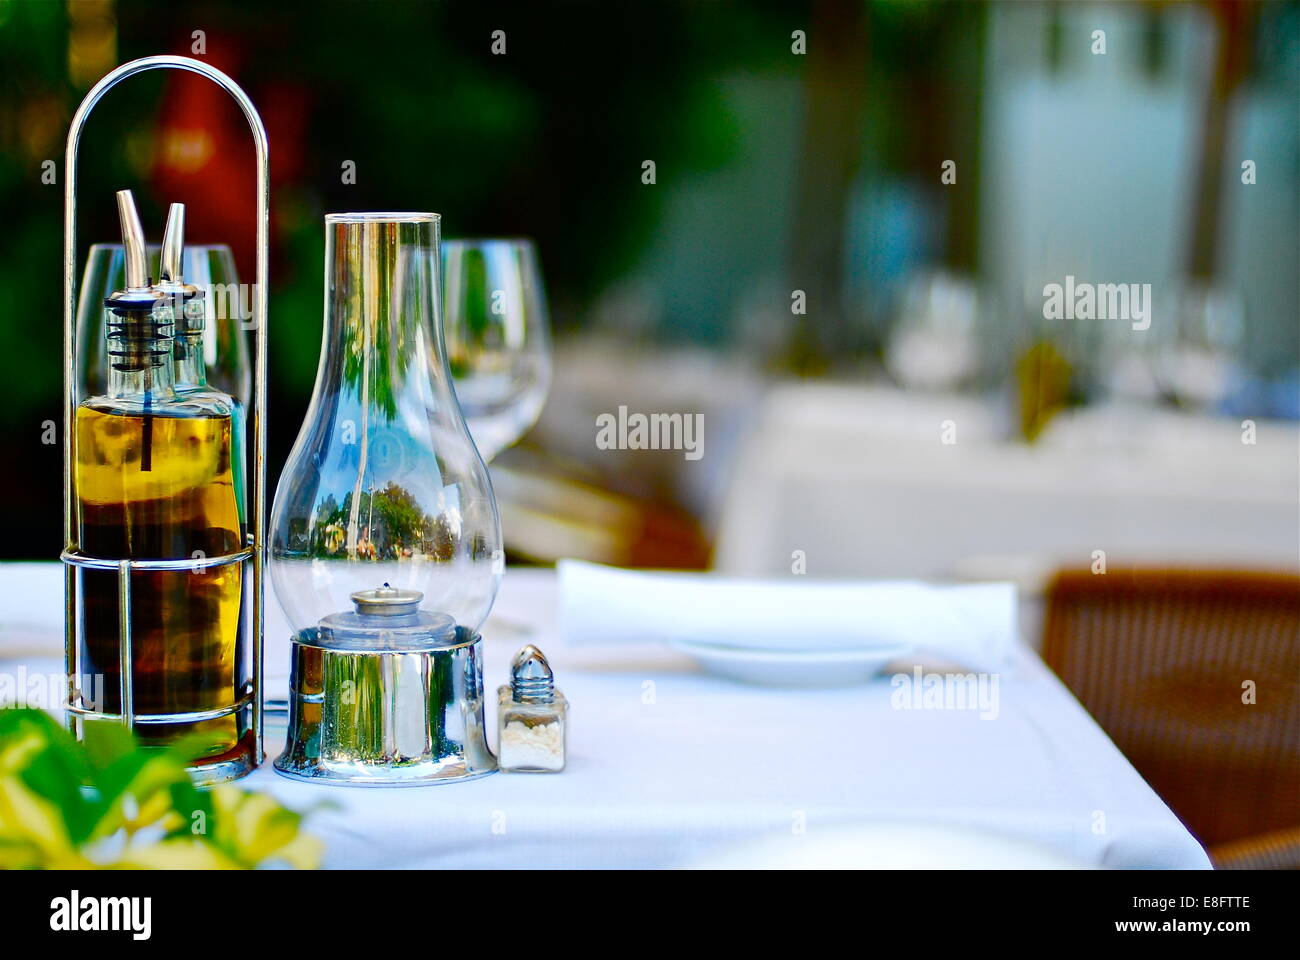 USA, Florida, Monroe County, Key West, Oil & vinaigrette on table in restaurant Stock Photo